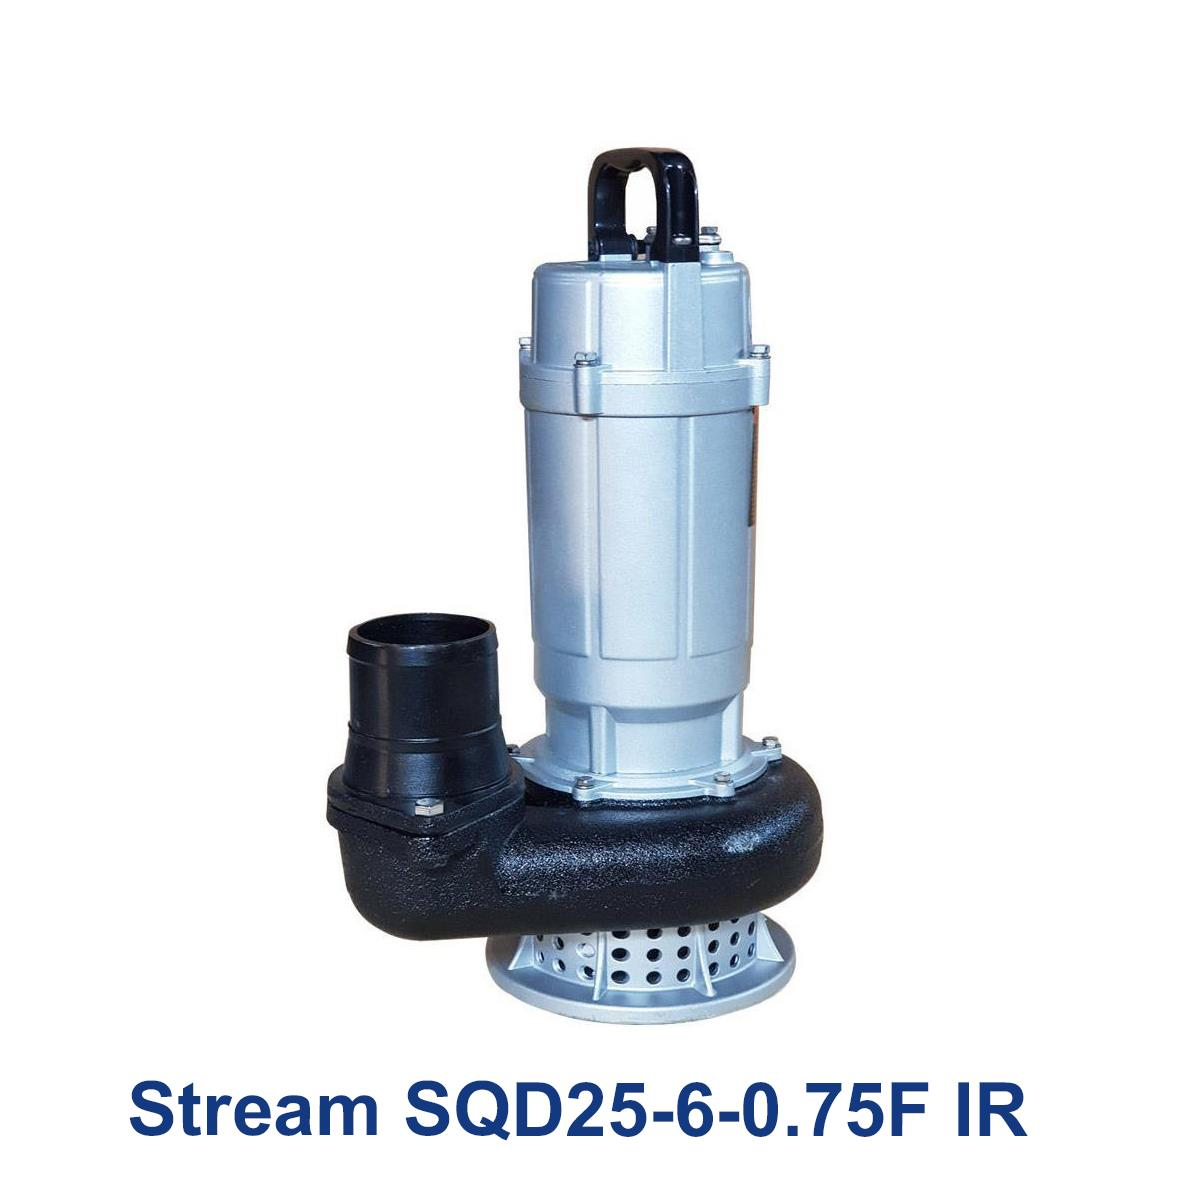 Stream-SQD25-6-0.75F-IR